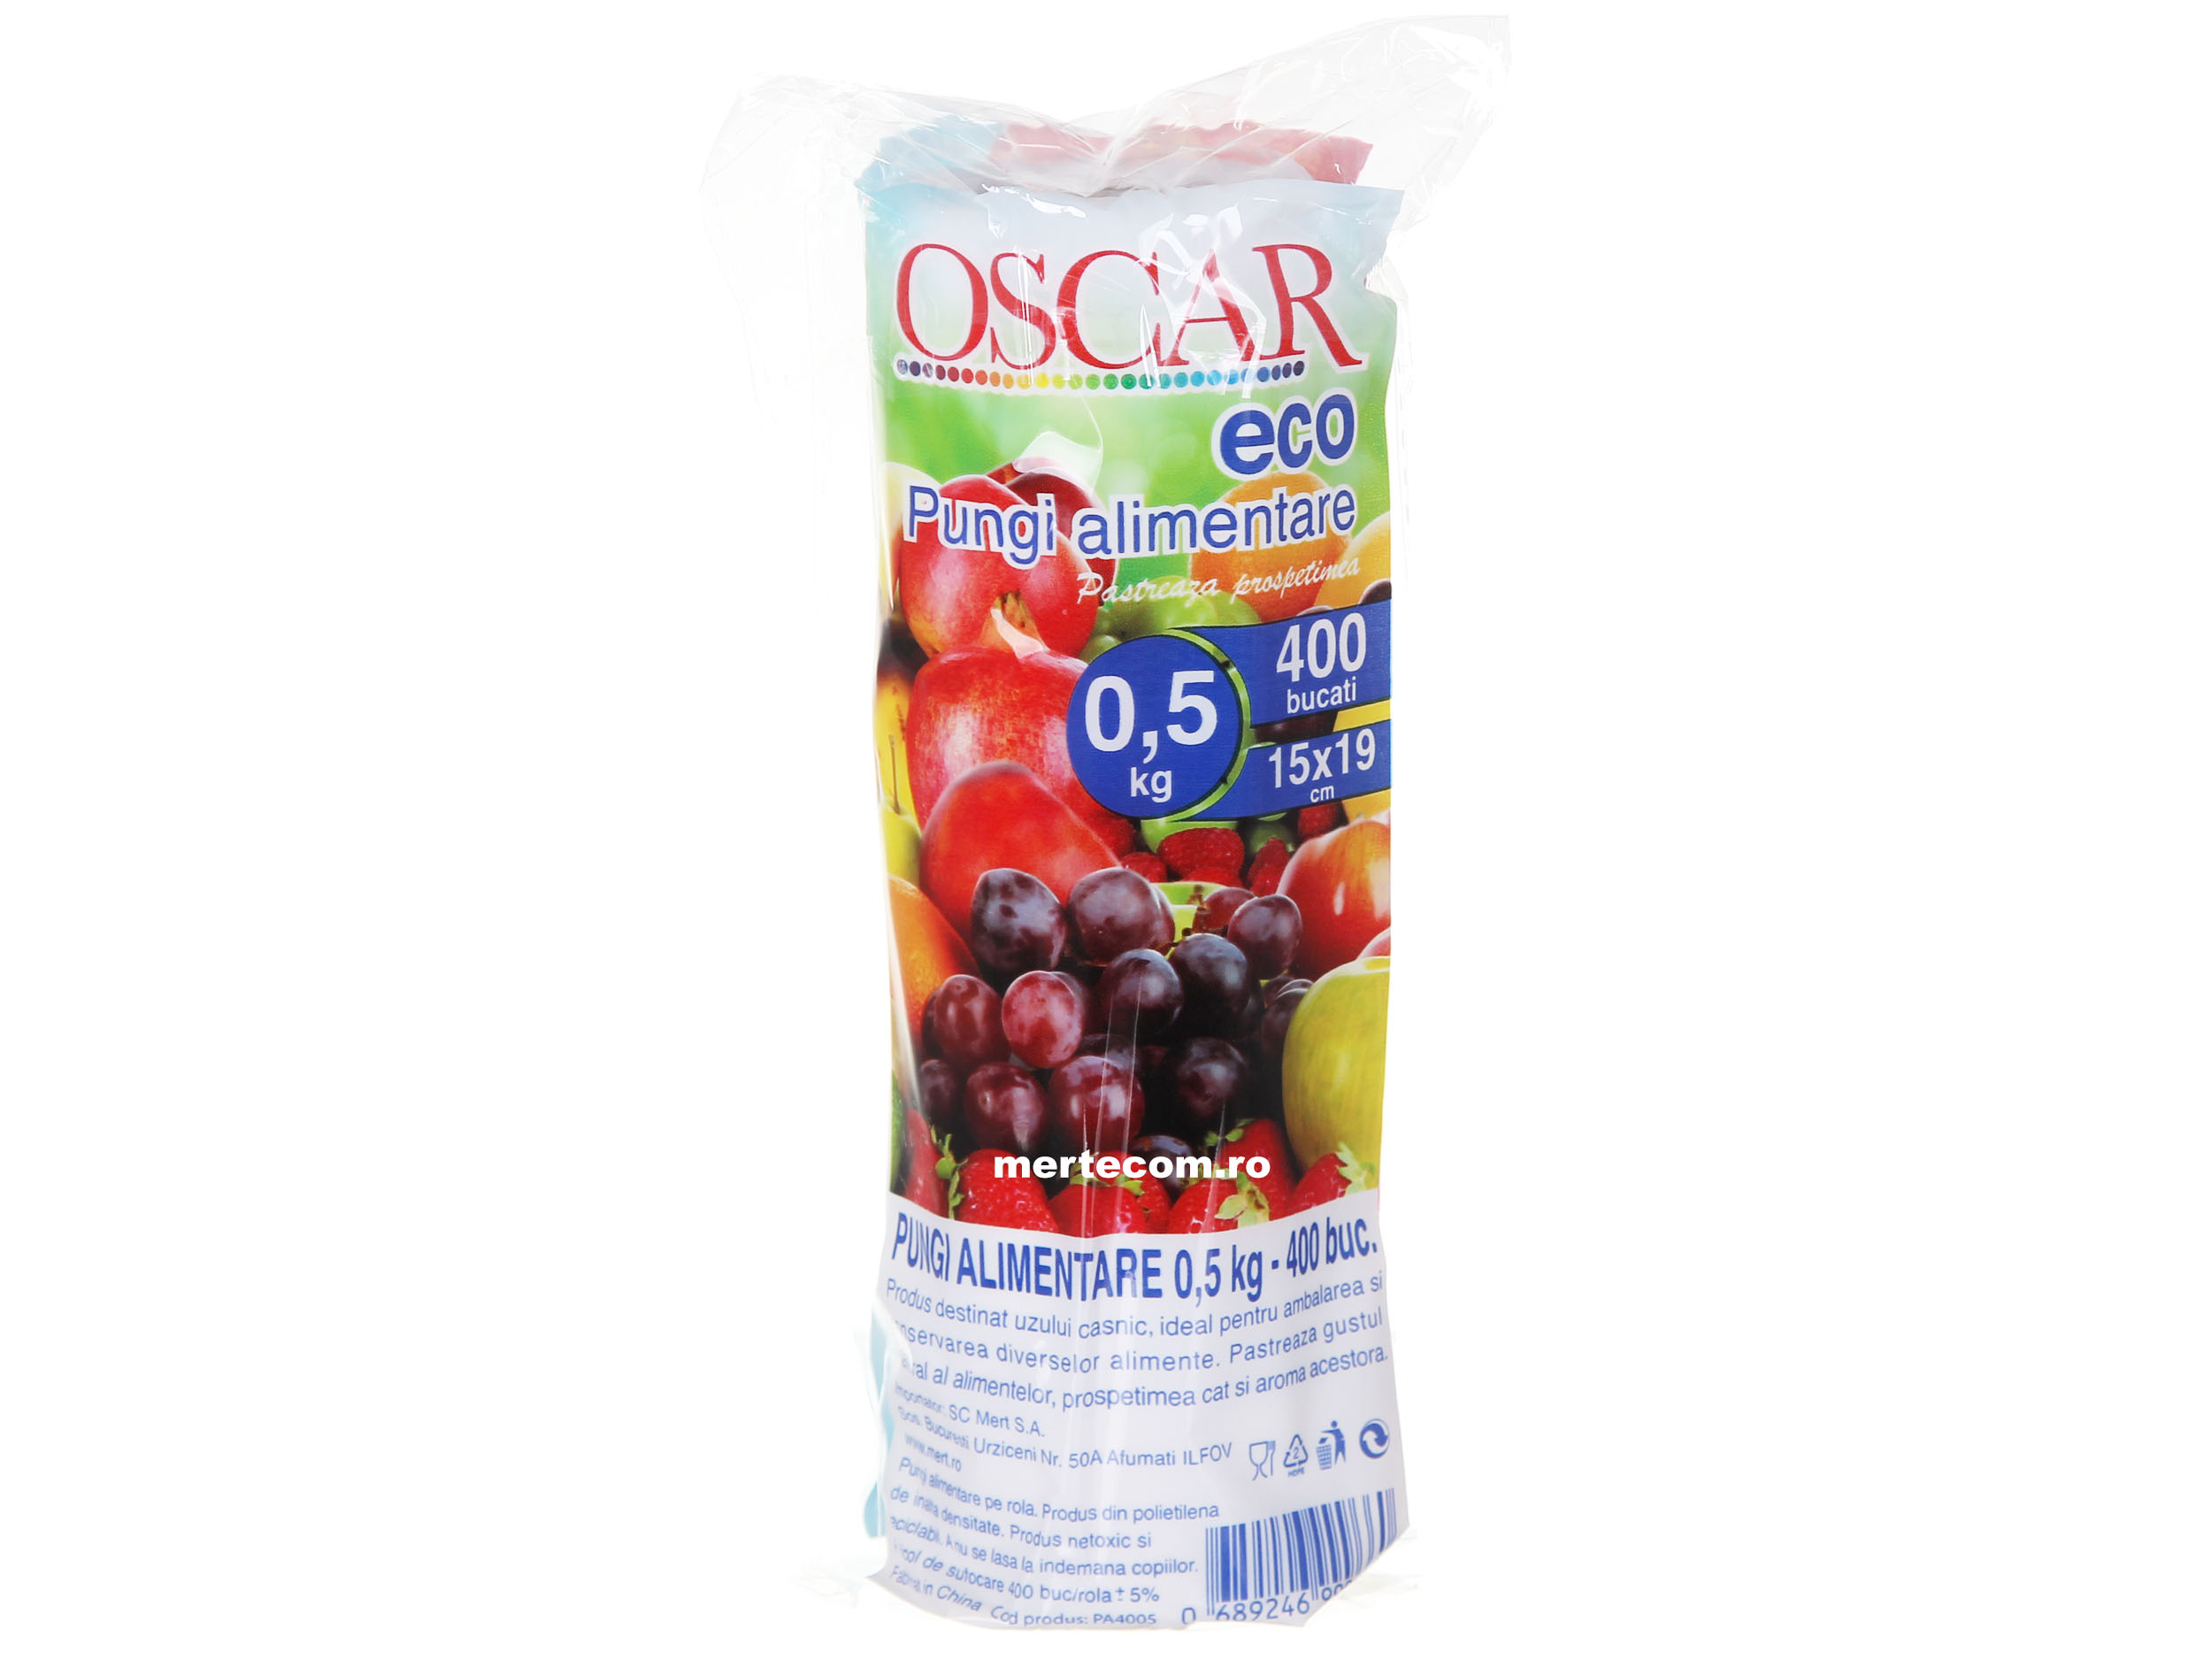 Pungi alimentare ECO Oscar 400buc/rola 0.5kg sanito.ro